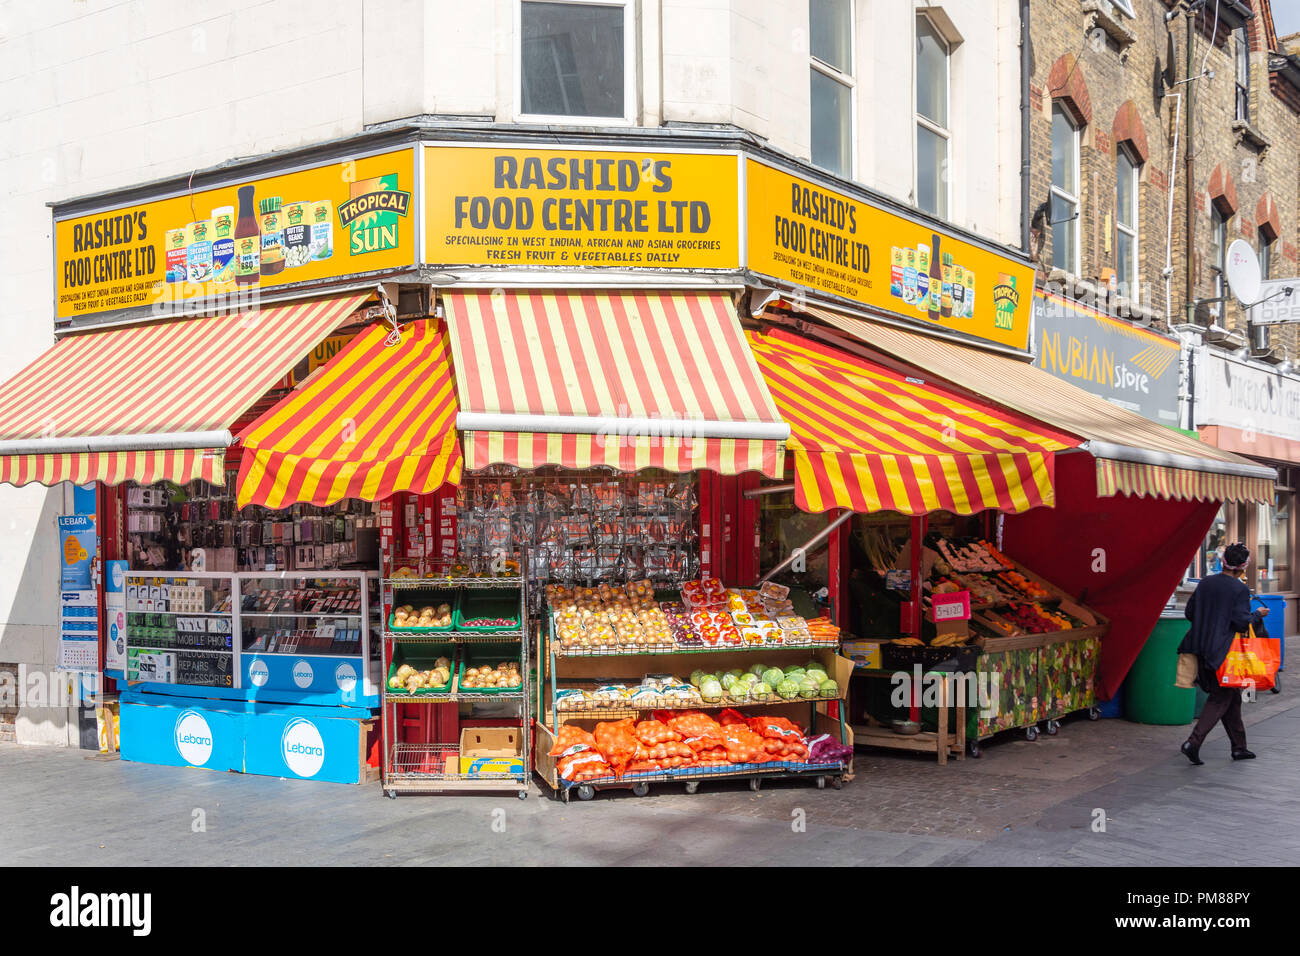 Rashid's Food Centre, Catford Broadway, Catford, London Borough of Lewisham, Greater London, England, United Kingdom Stock Photo